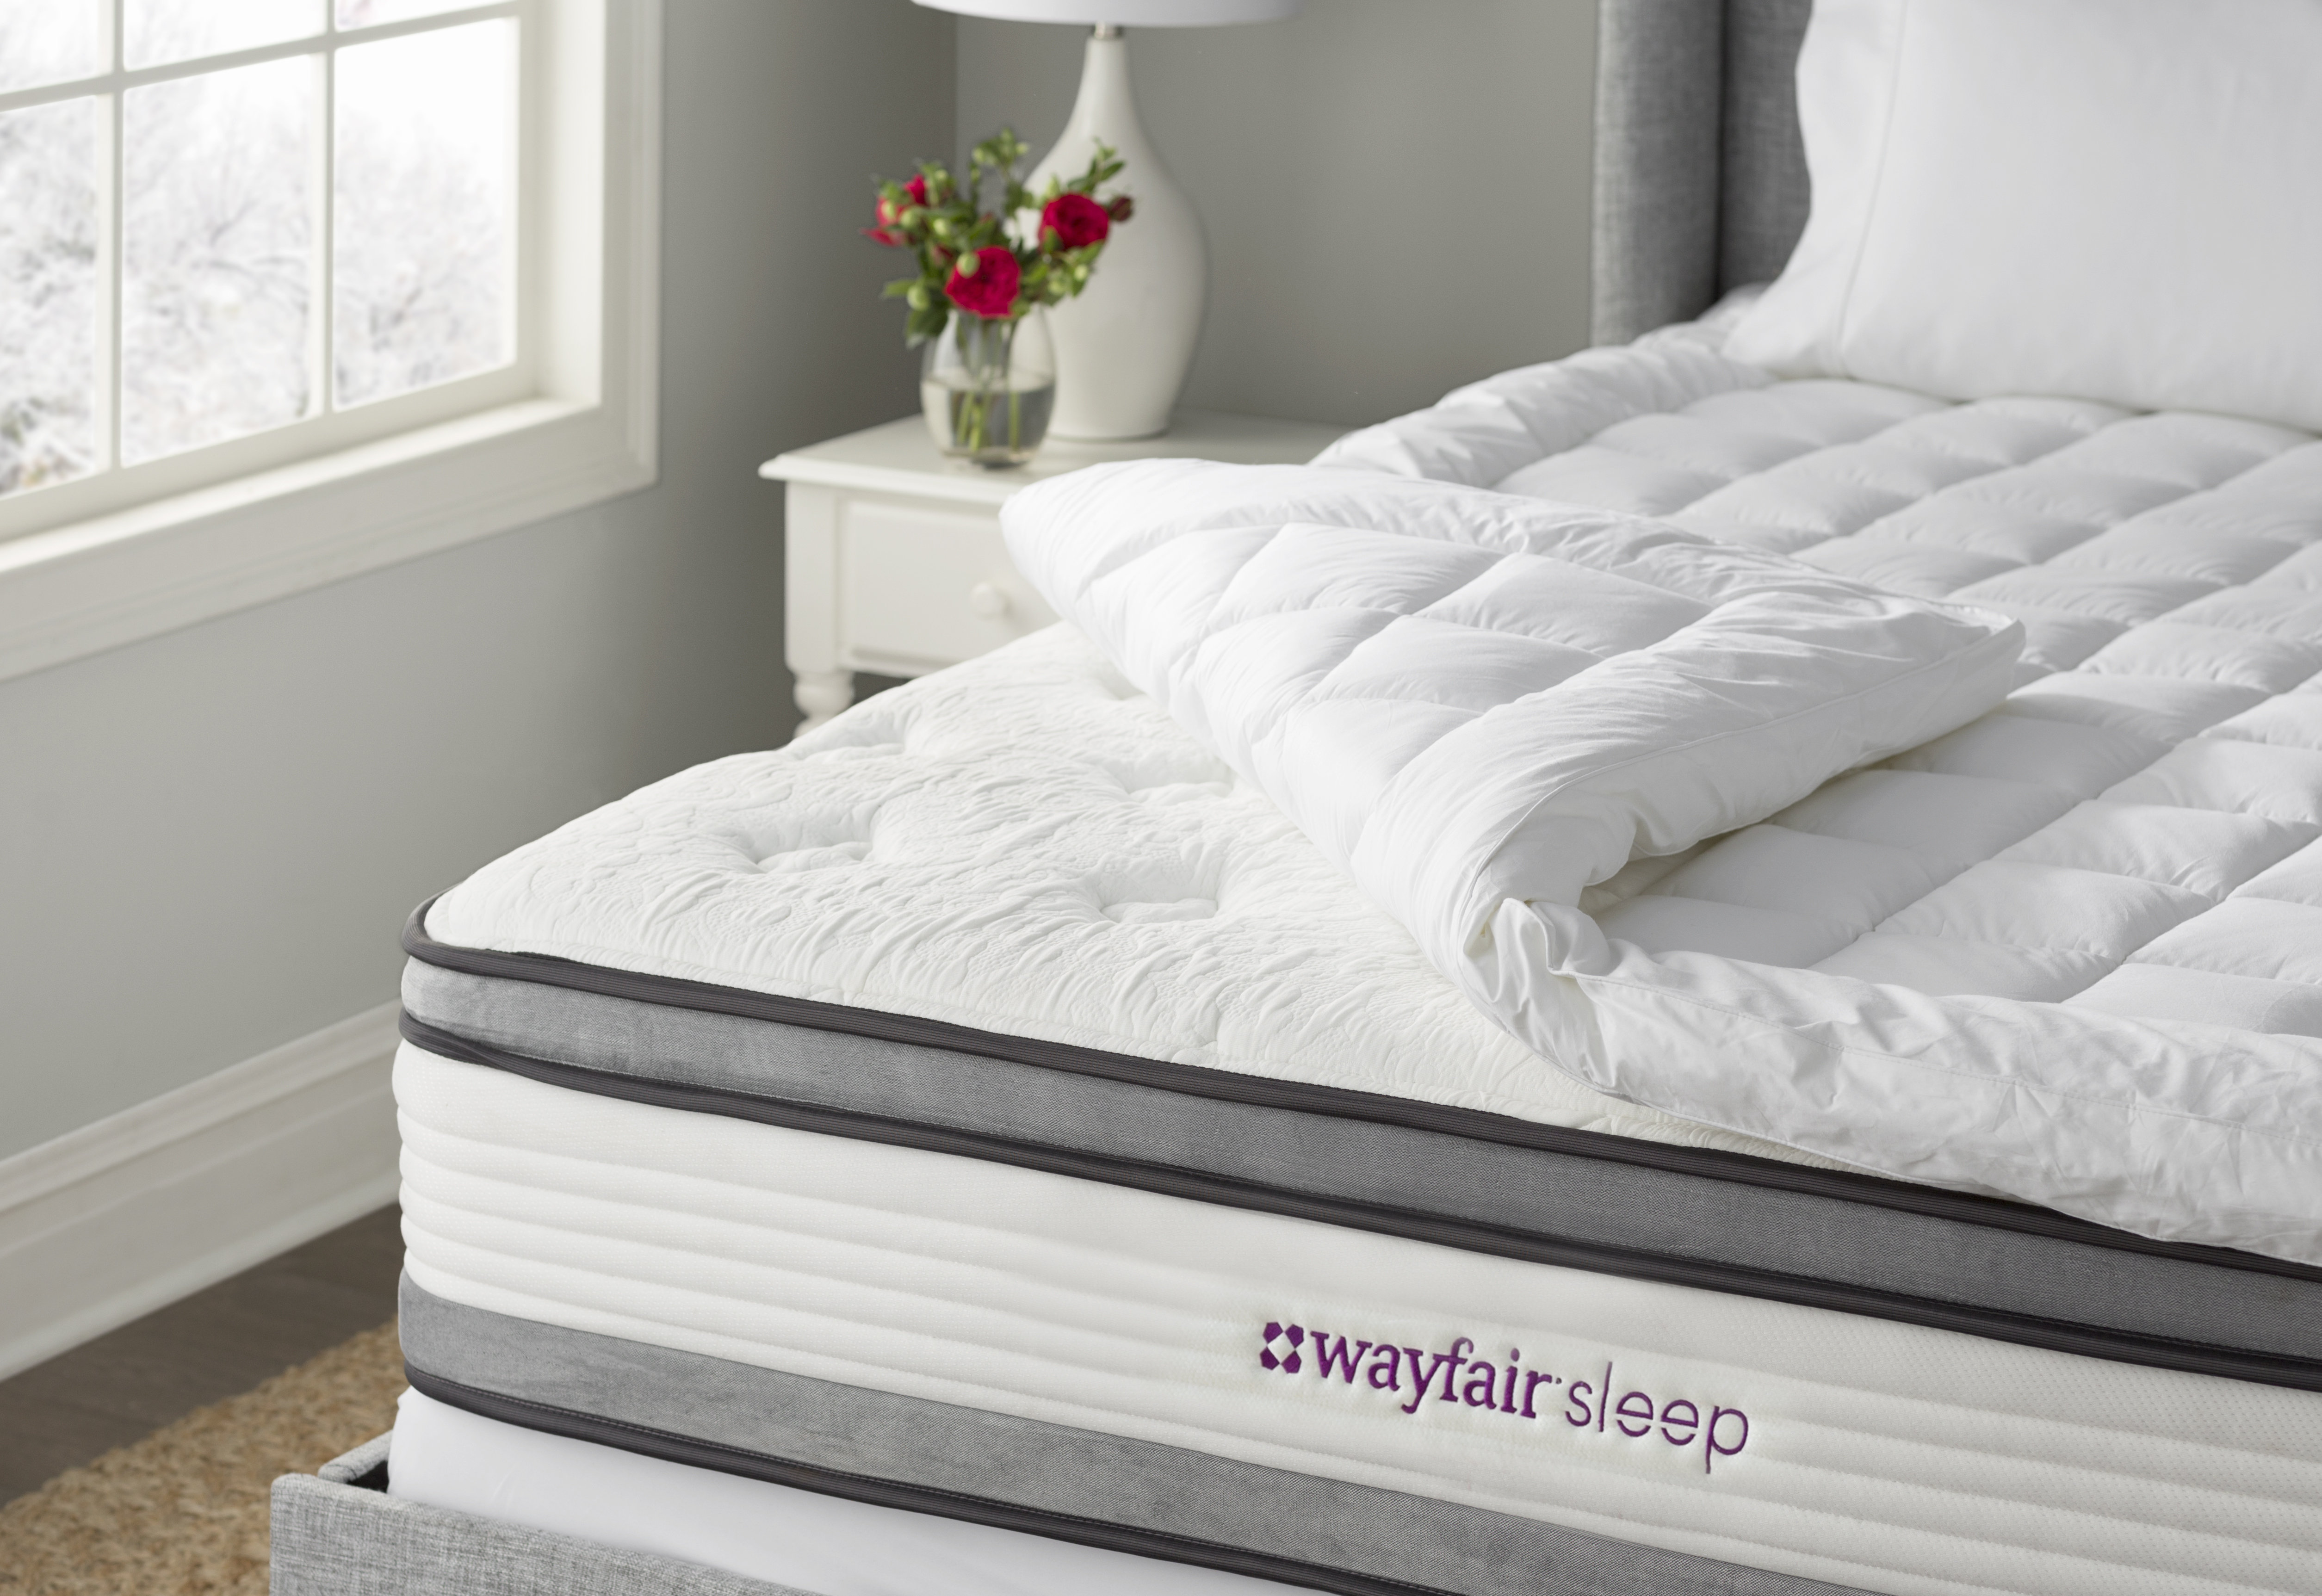 Wayfair Sleep 10 5 Plush Hybrid Mattress Reviews Wayfair